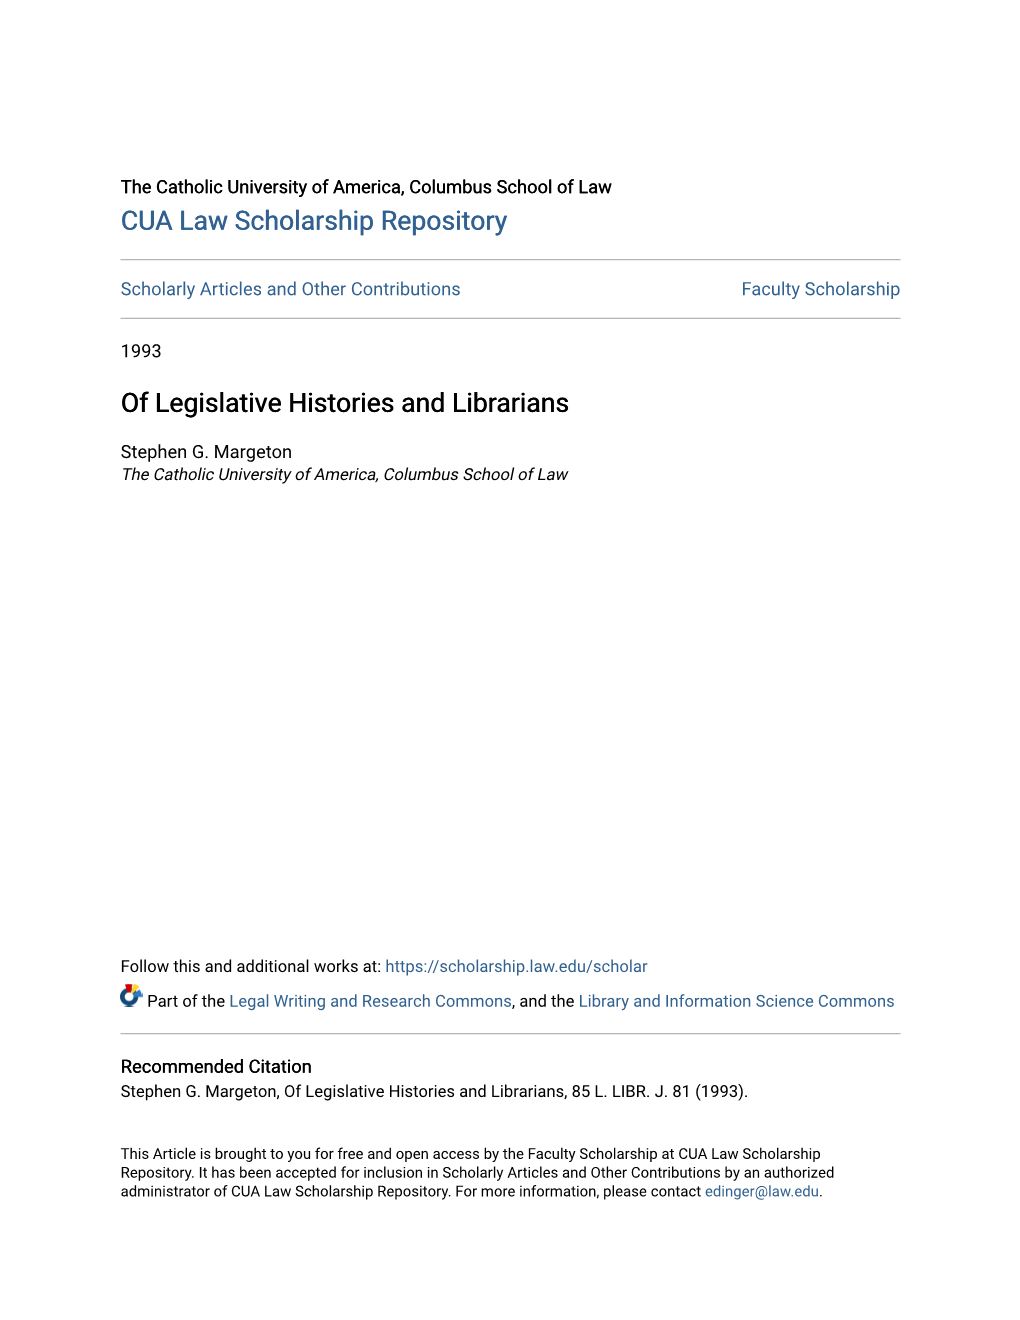 Of Legislative Histories and Librarians